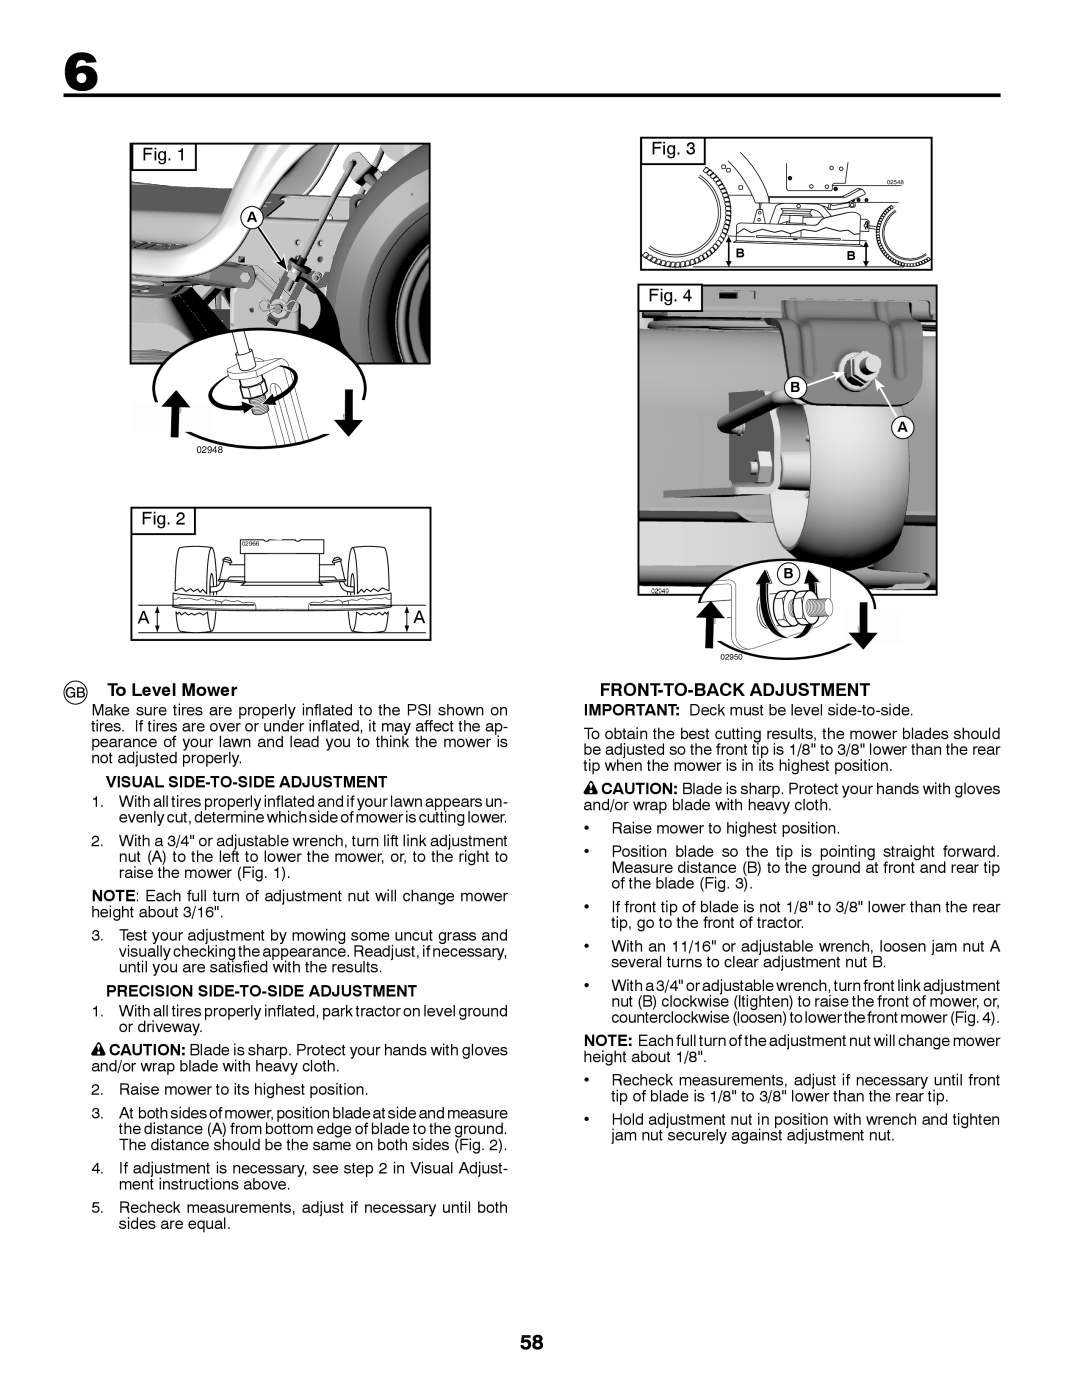 Husqvarna LT126 instruction manual To Level Mower, Front-To-Back Adjustment, Visual Side-To-Side Adjustment 